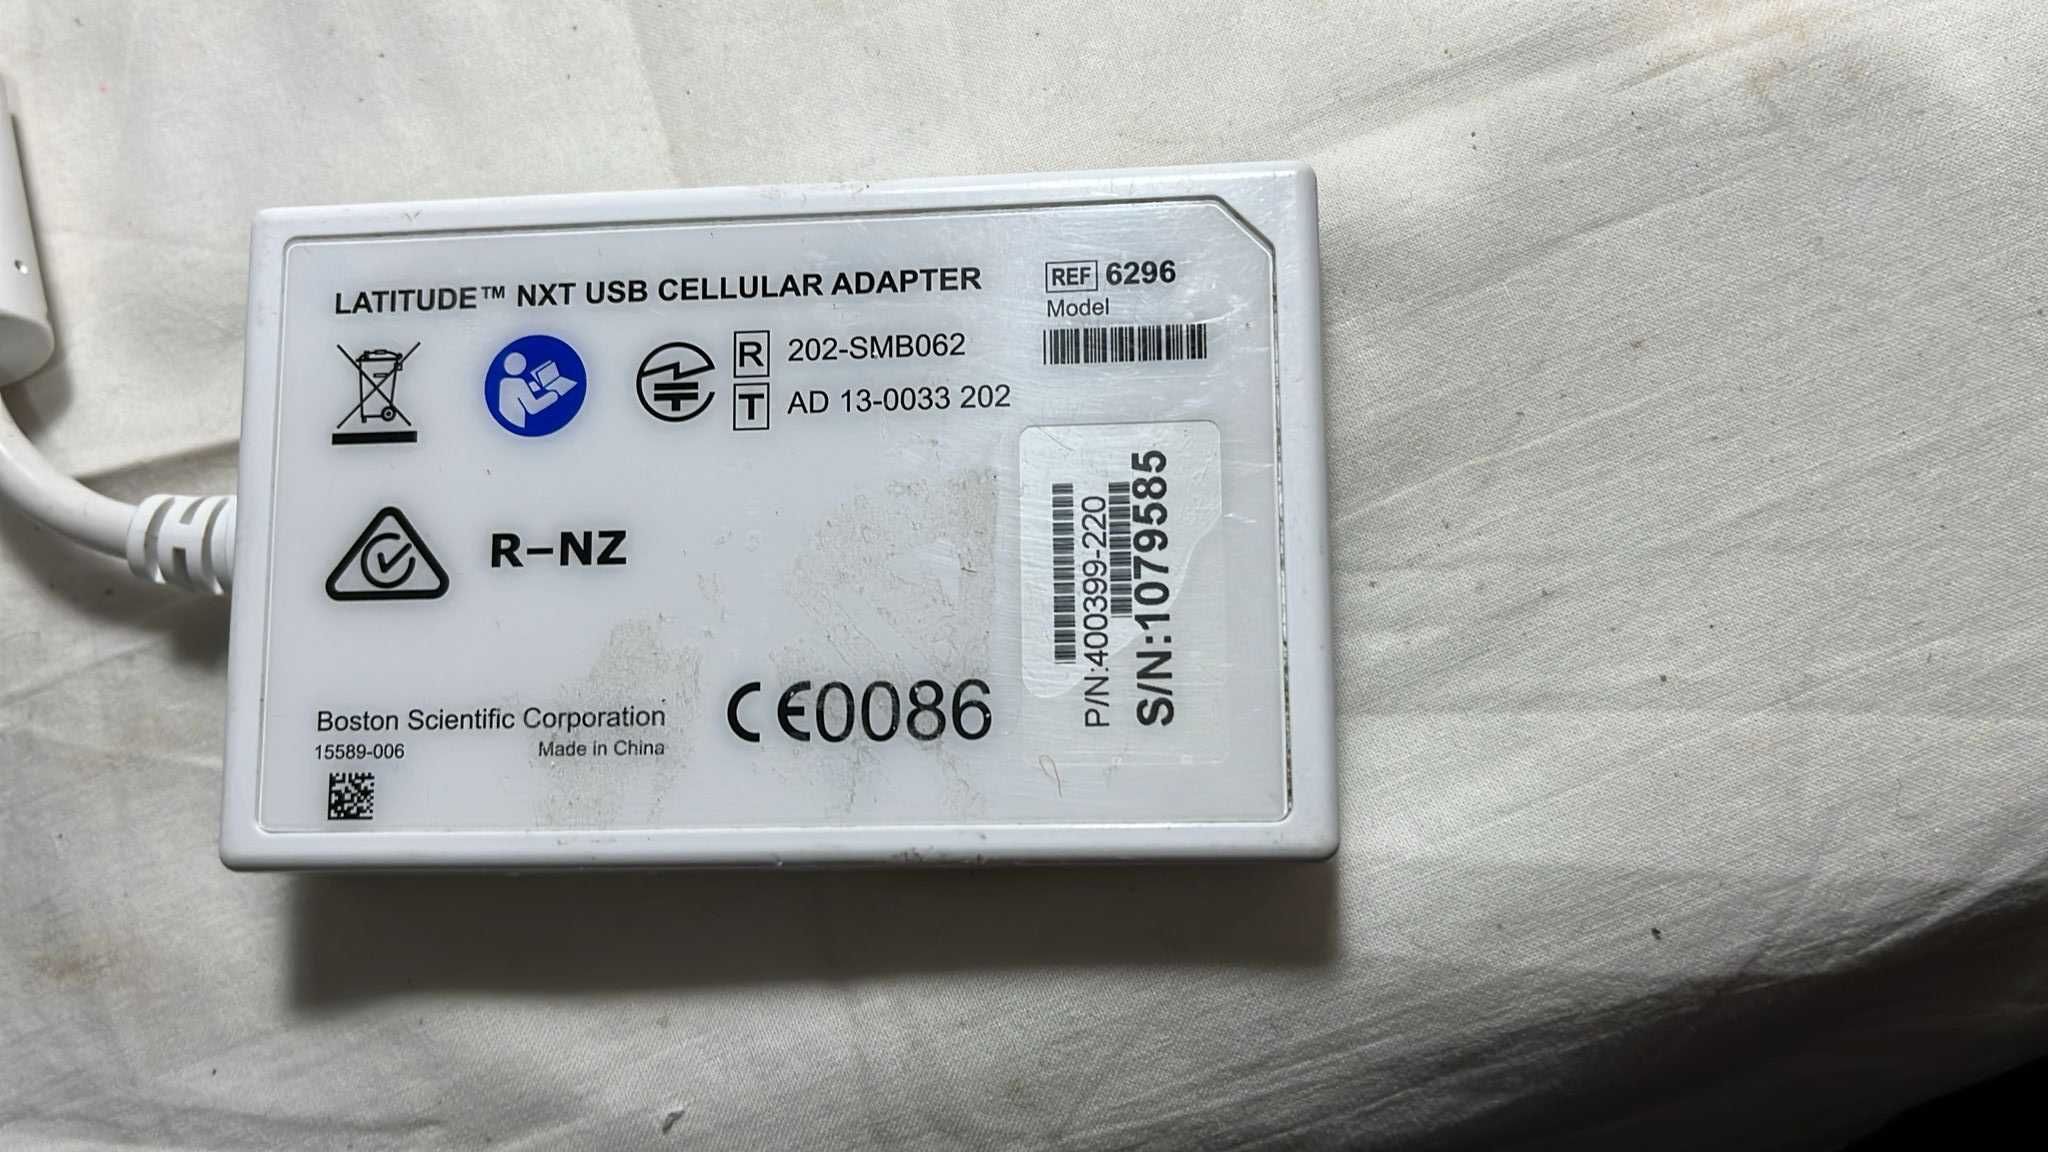 Boston Scientific Latitude NXT USB Cellular Adapter Model 6296